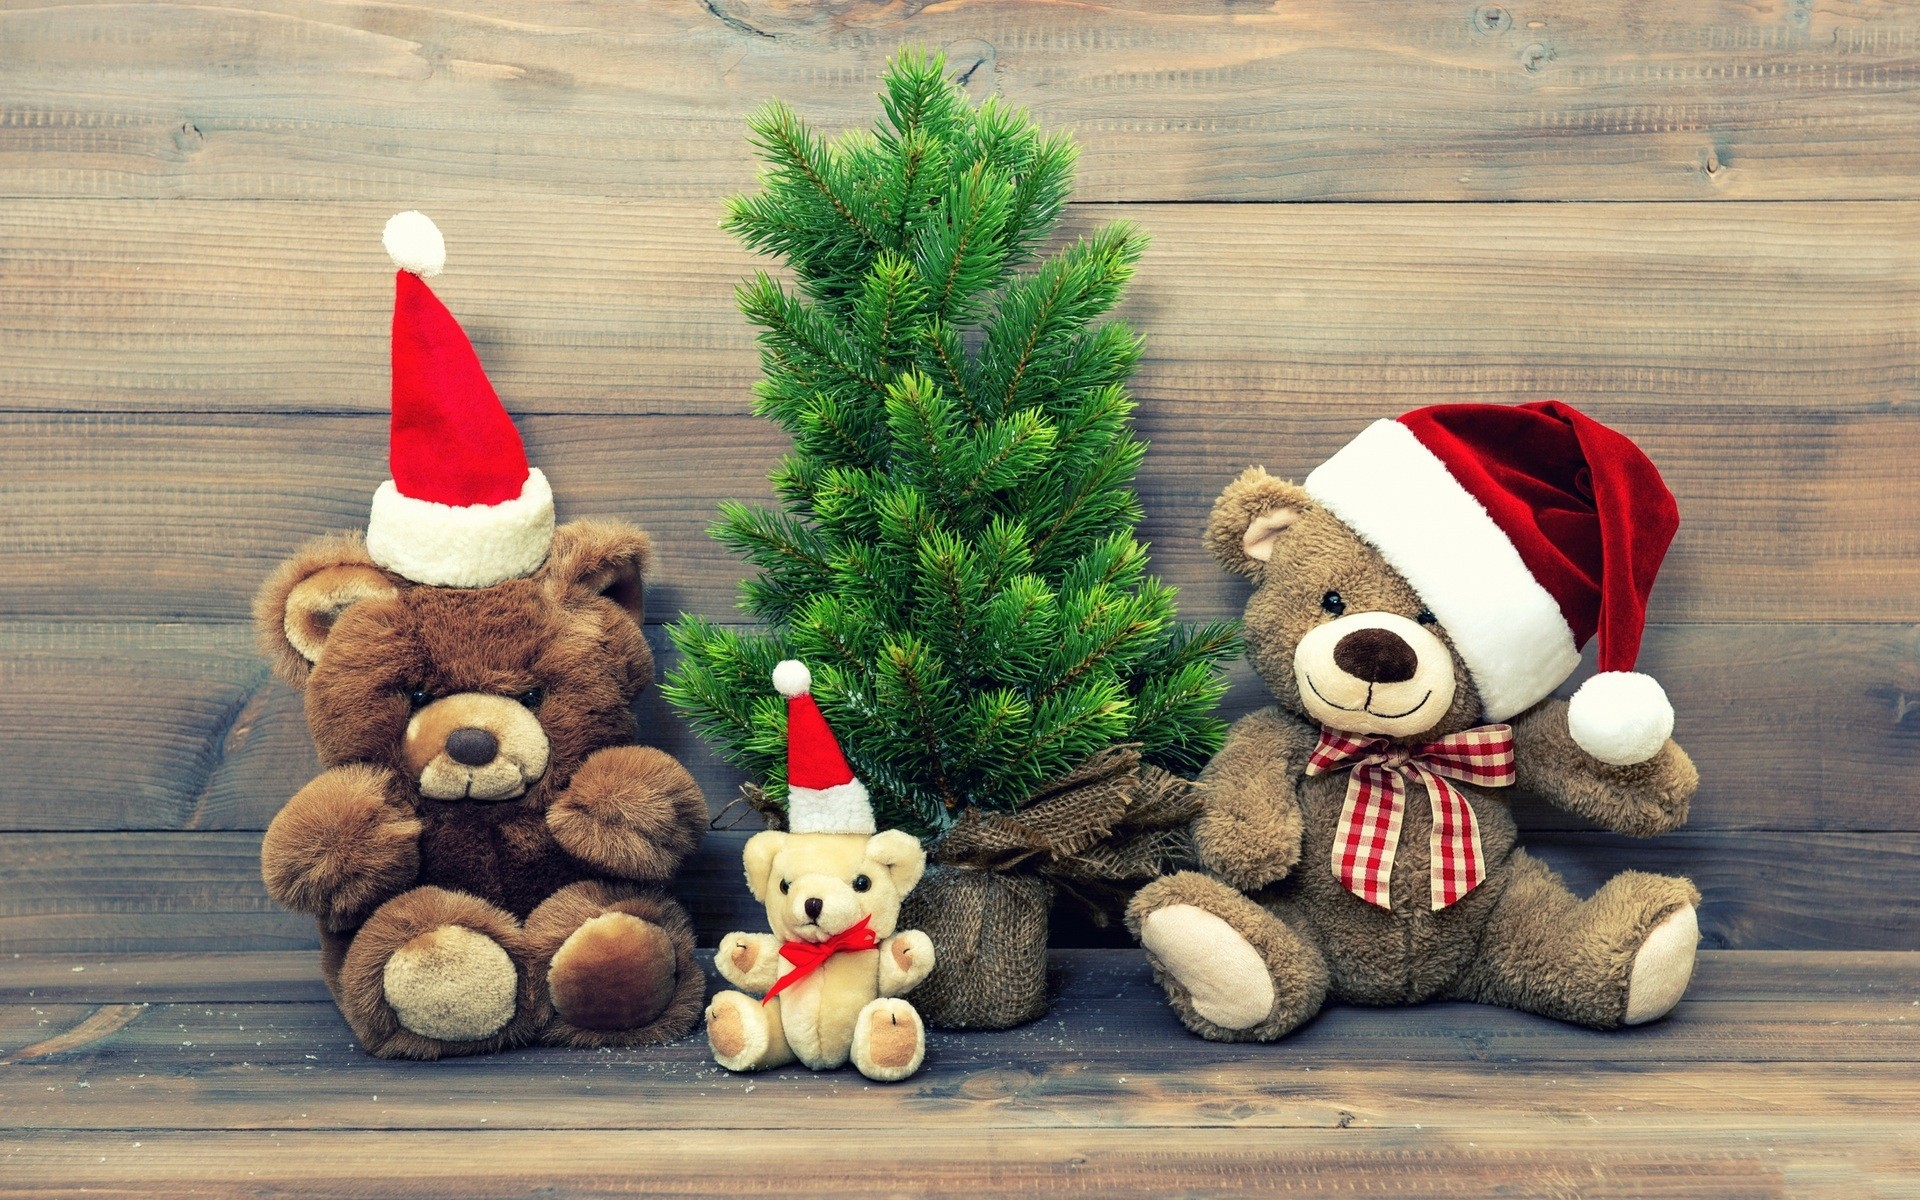 General 1920x1200 teddy bears Christmas fir plush toy Santa hats